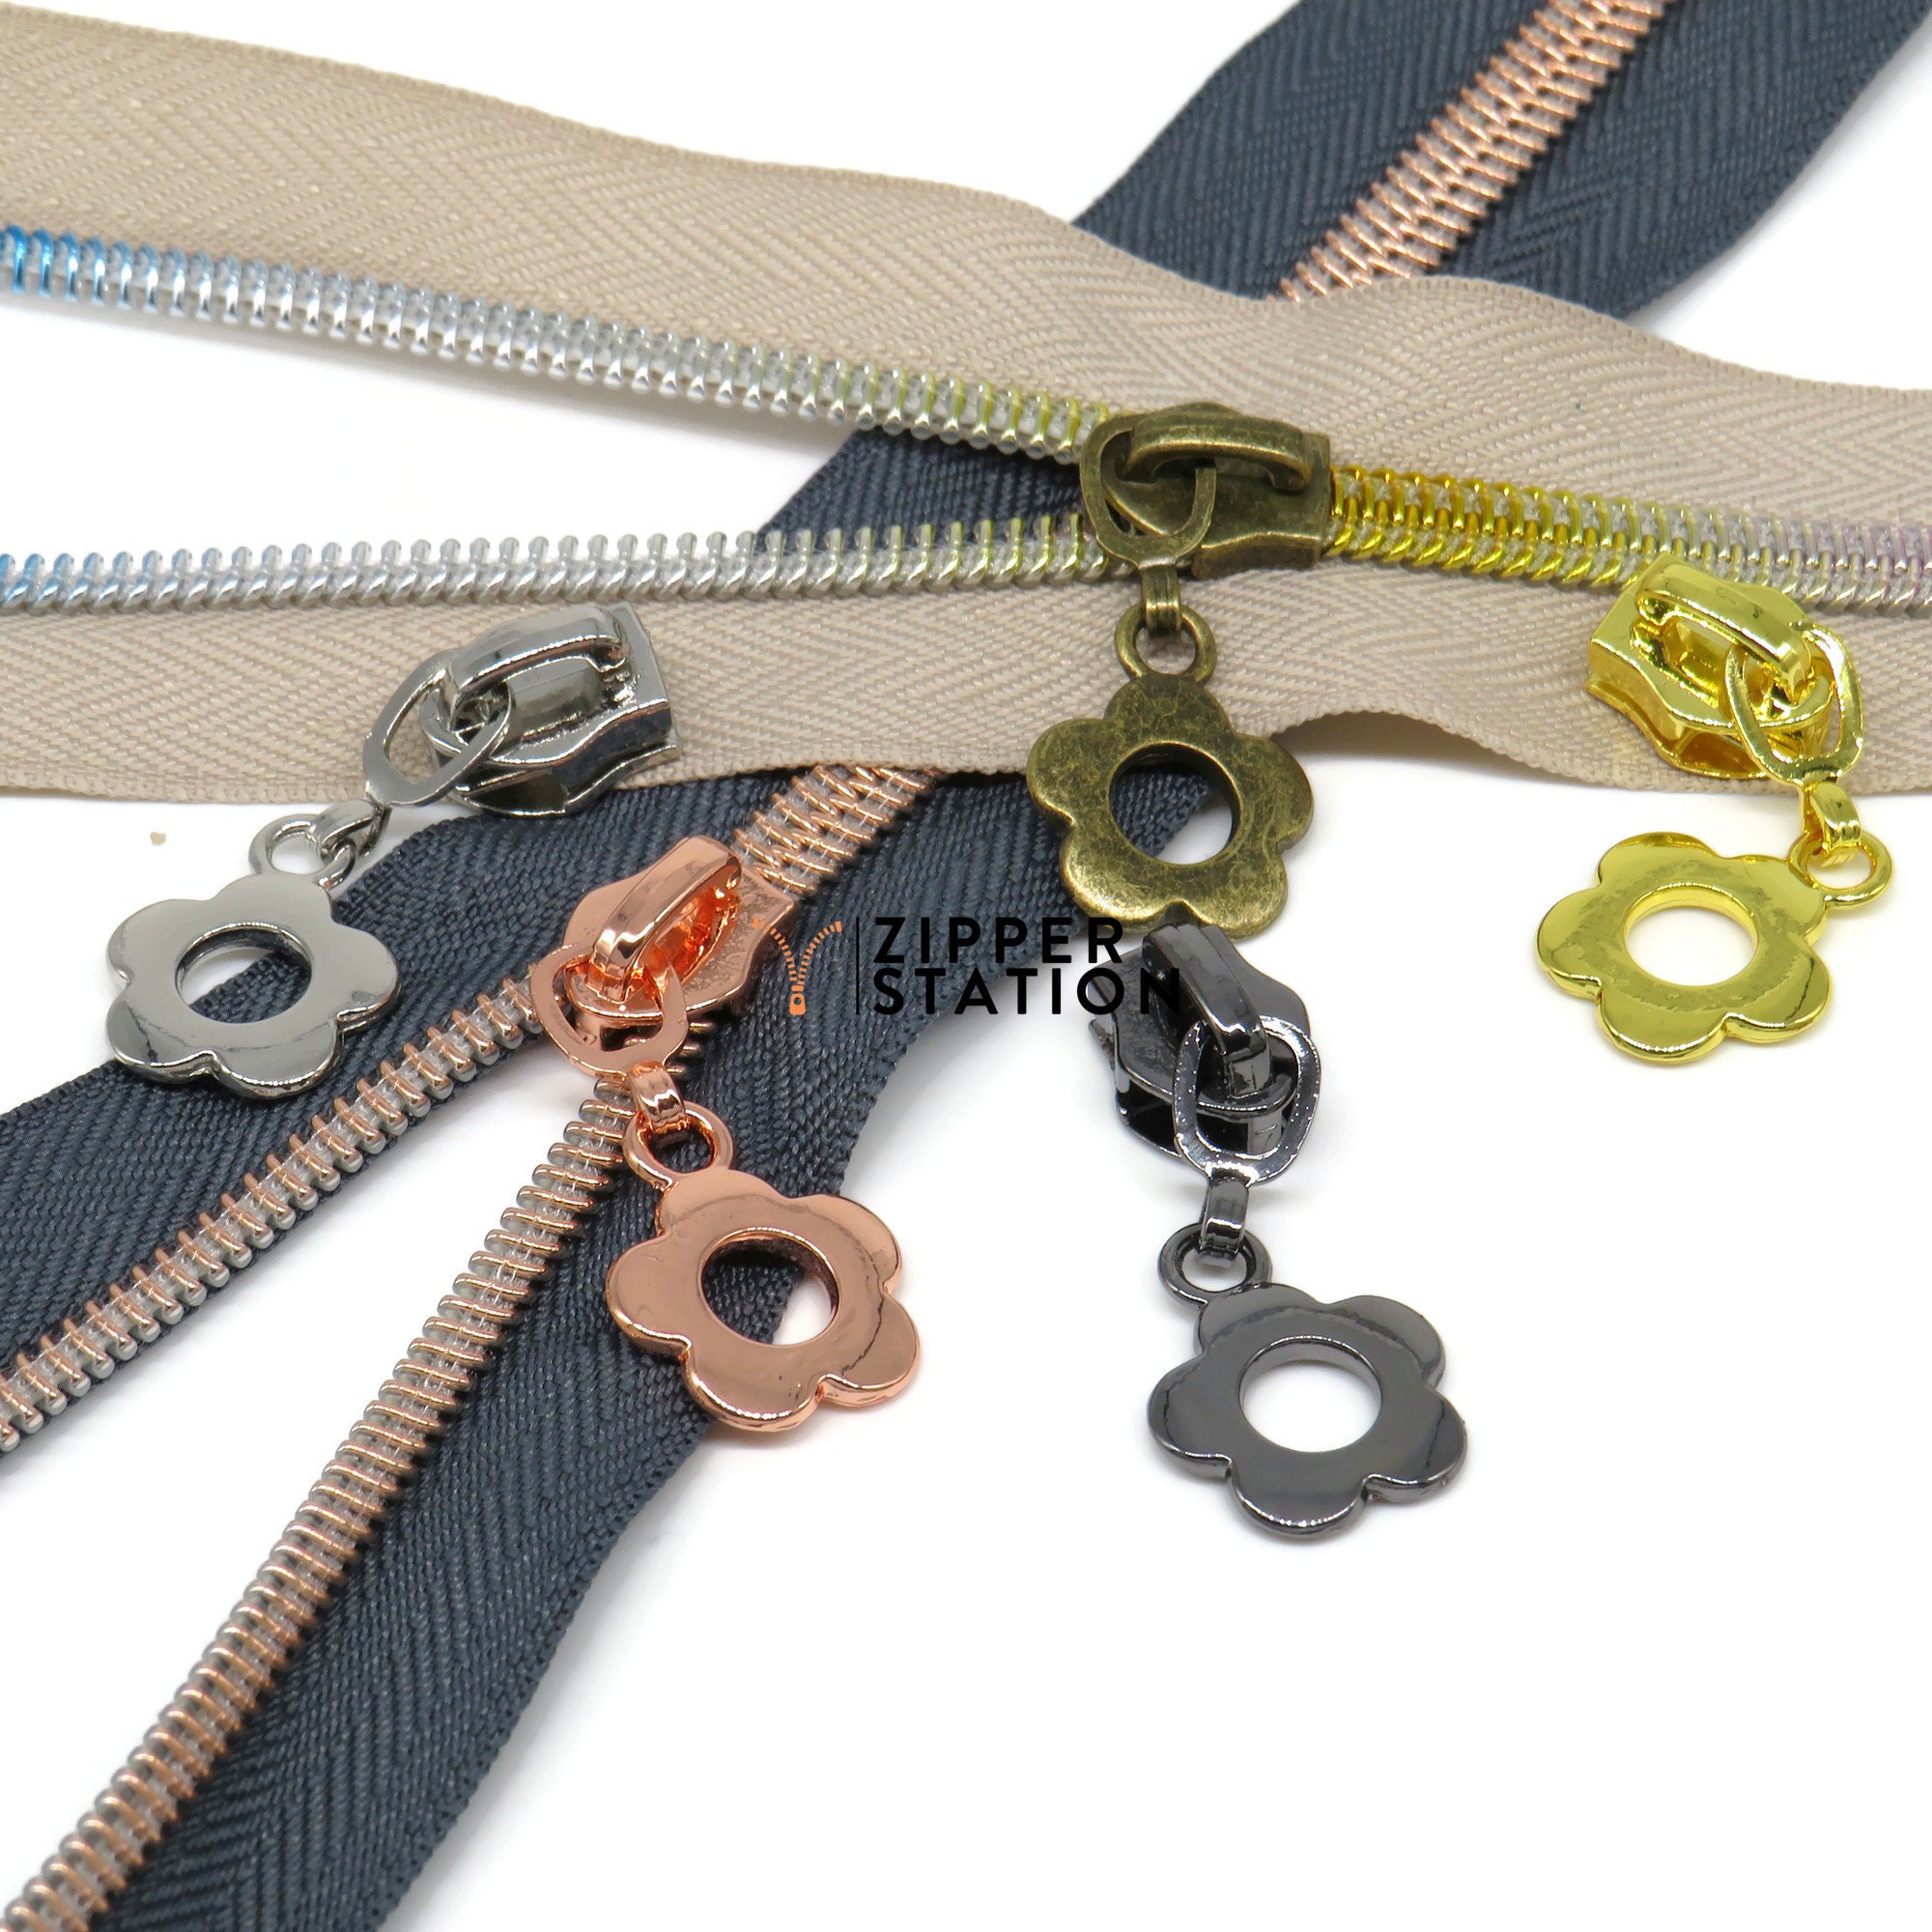 Decorative No3 Zip Slides for Nylon Coil Zipper, Pulls for